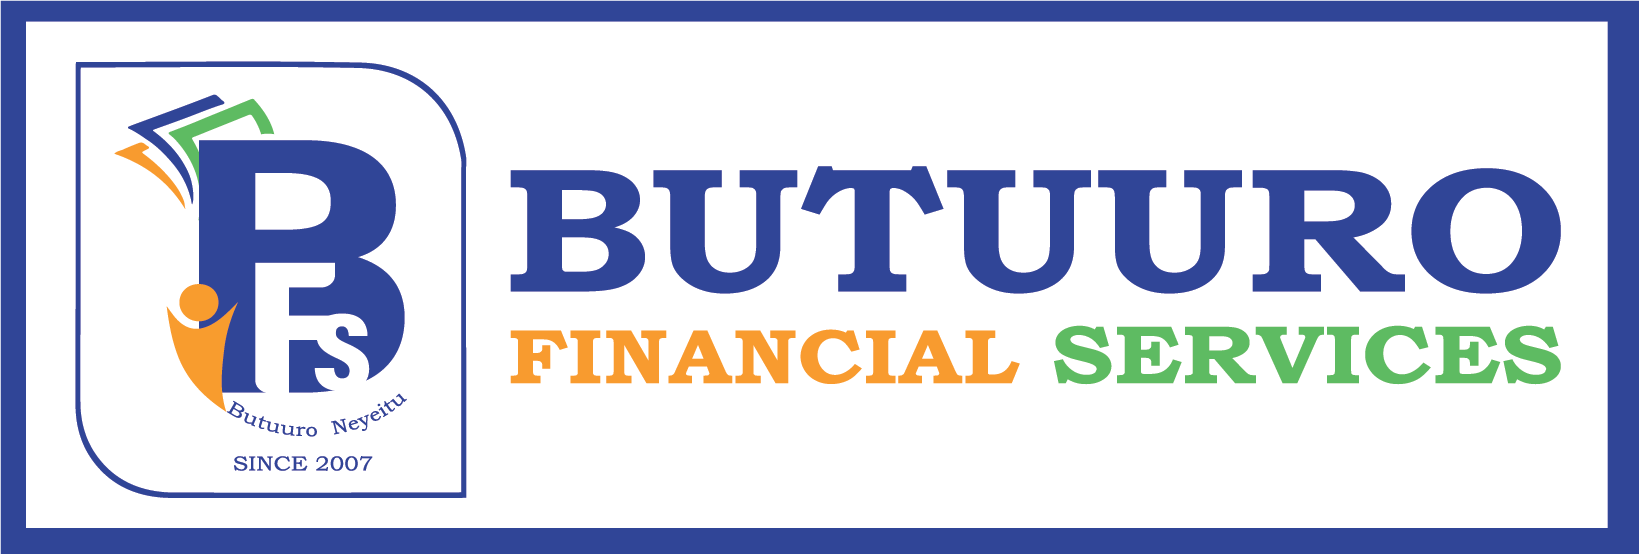 Butuuro Financial Services-Butuuro Neyeitu